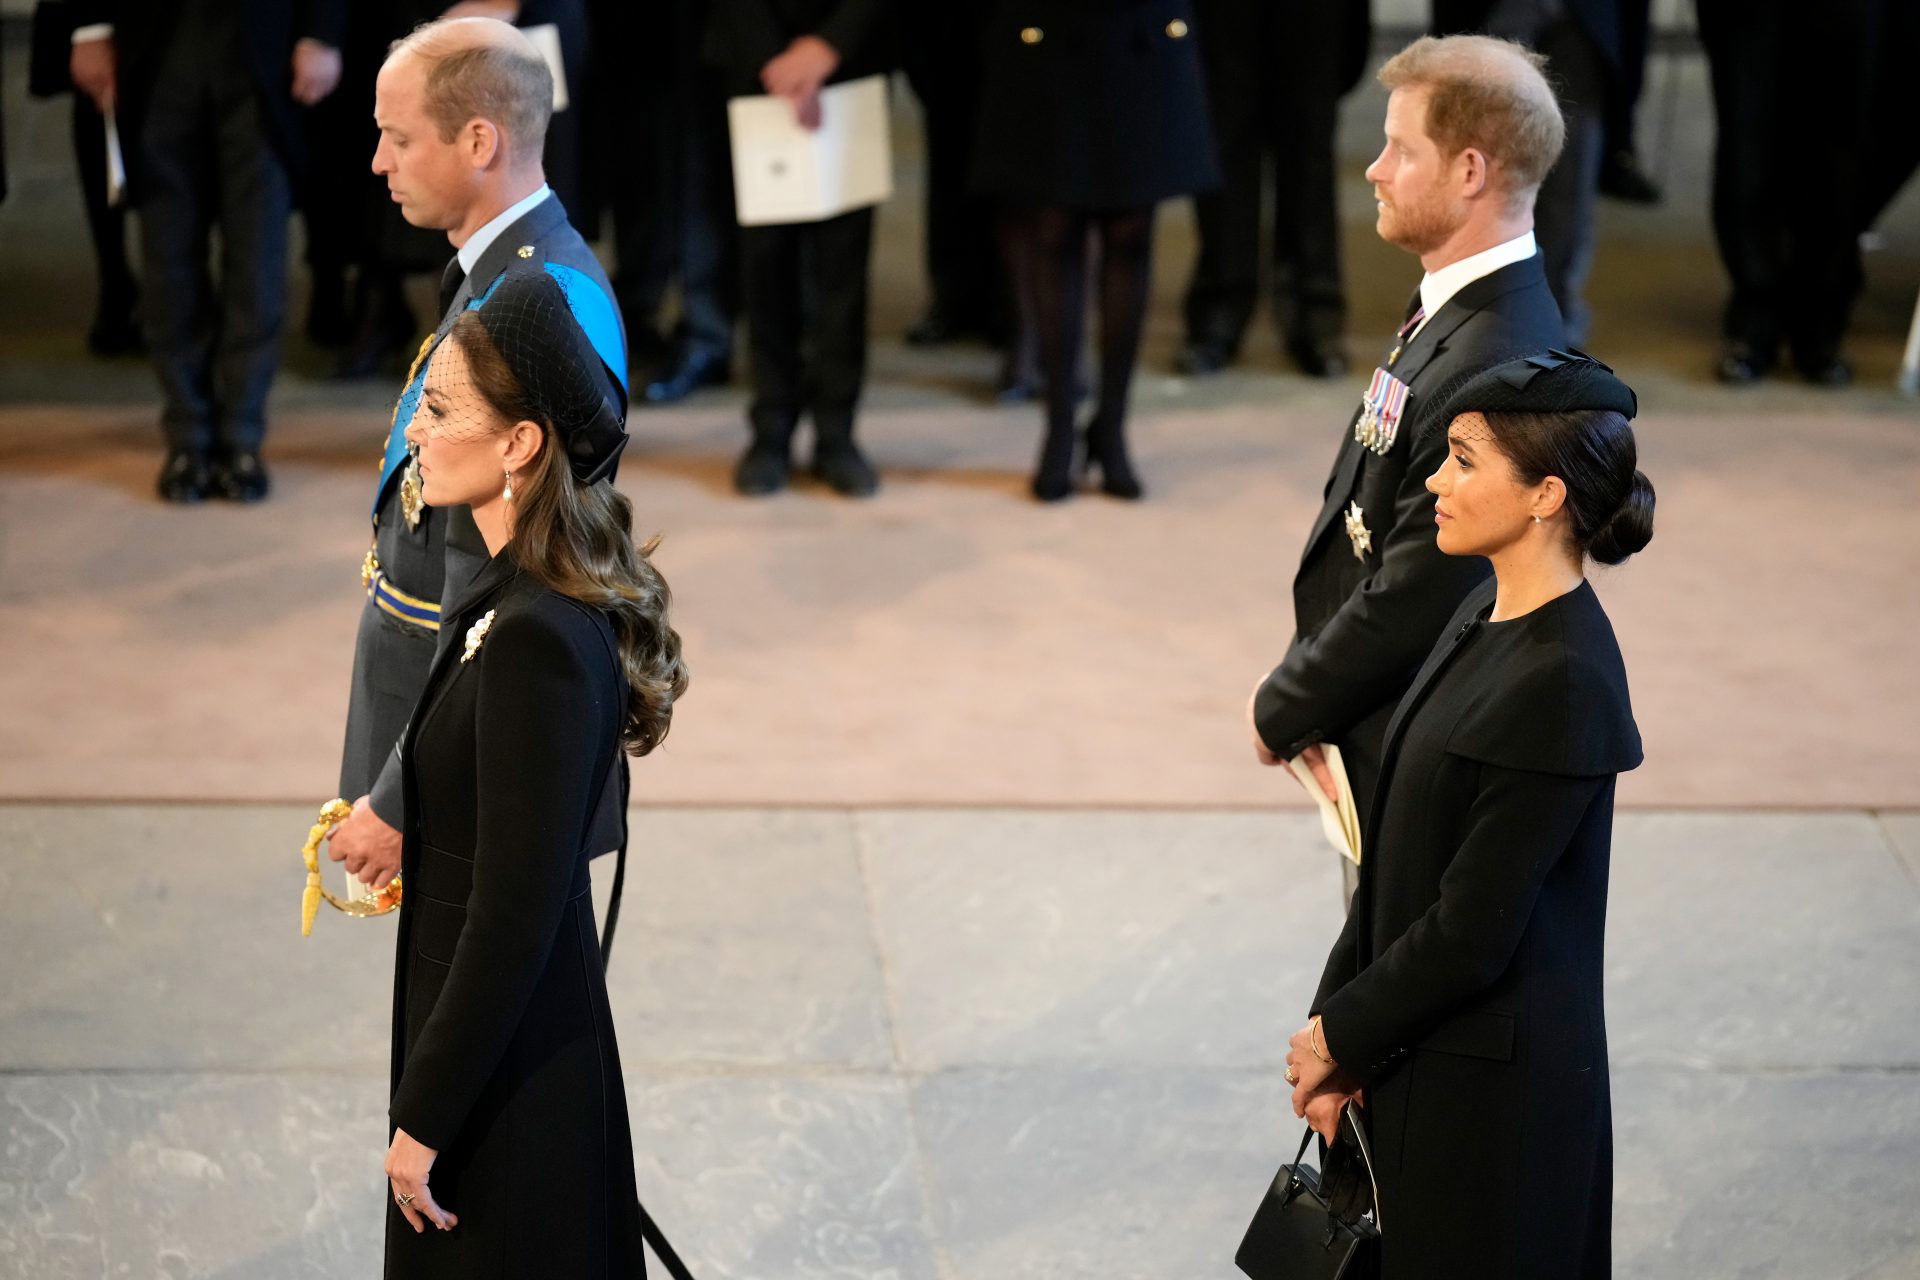 Kate Middleton passa a ditar as próprias regras na realeza, diz